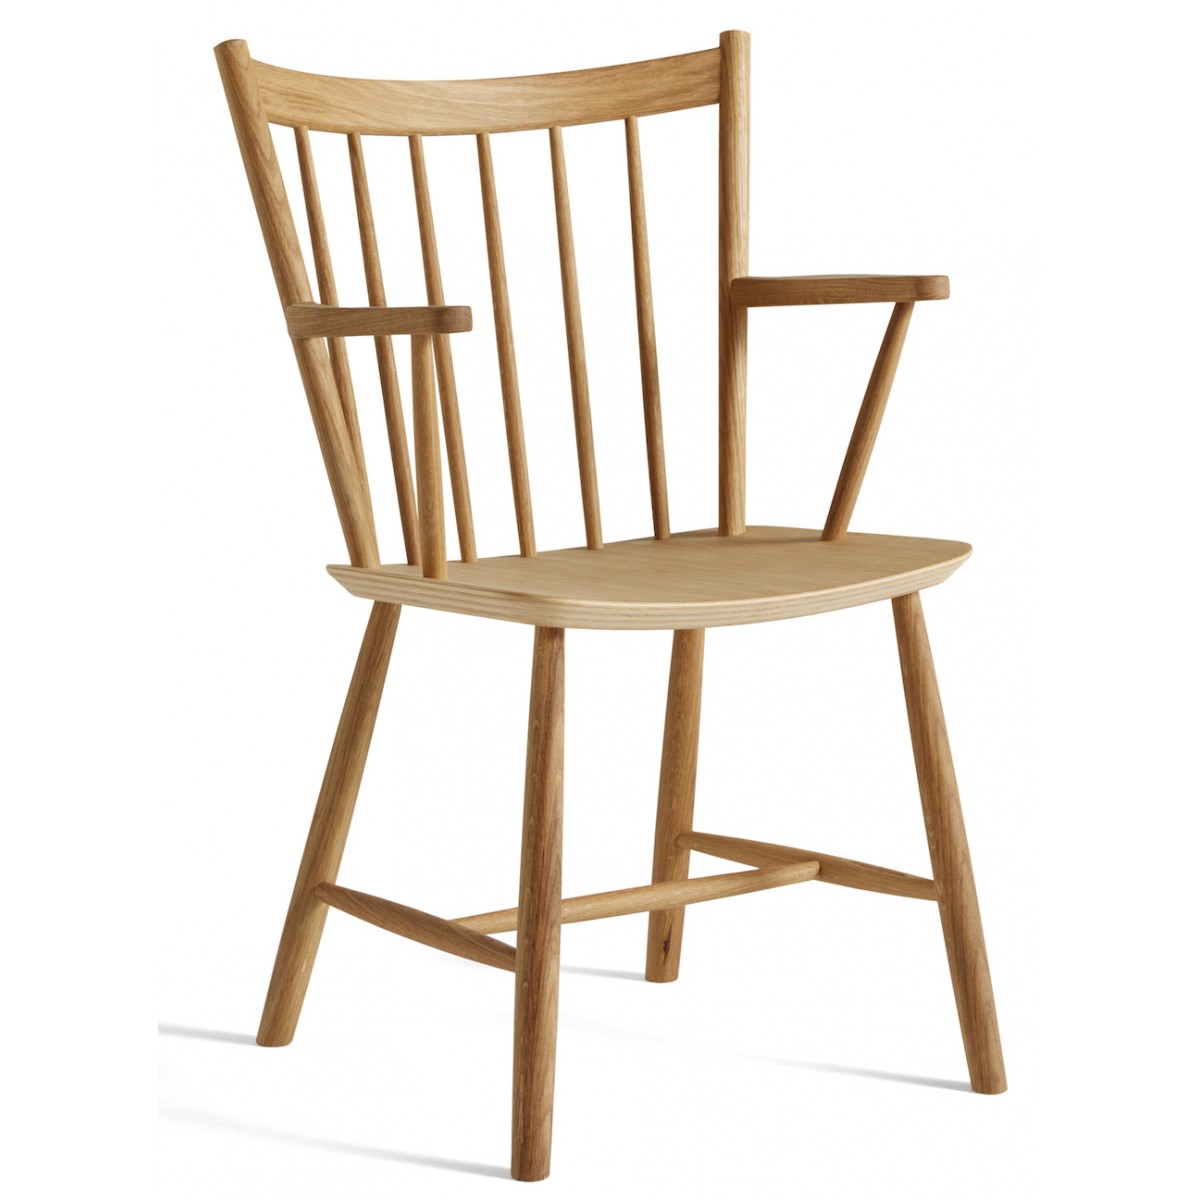 oiled oak - J42 chair